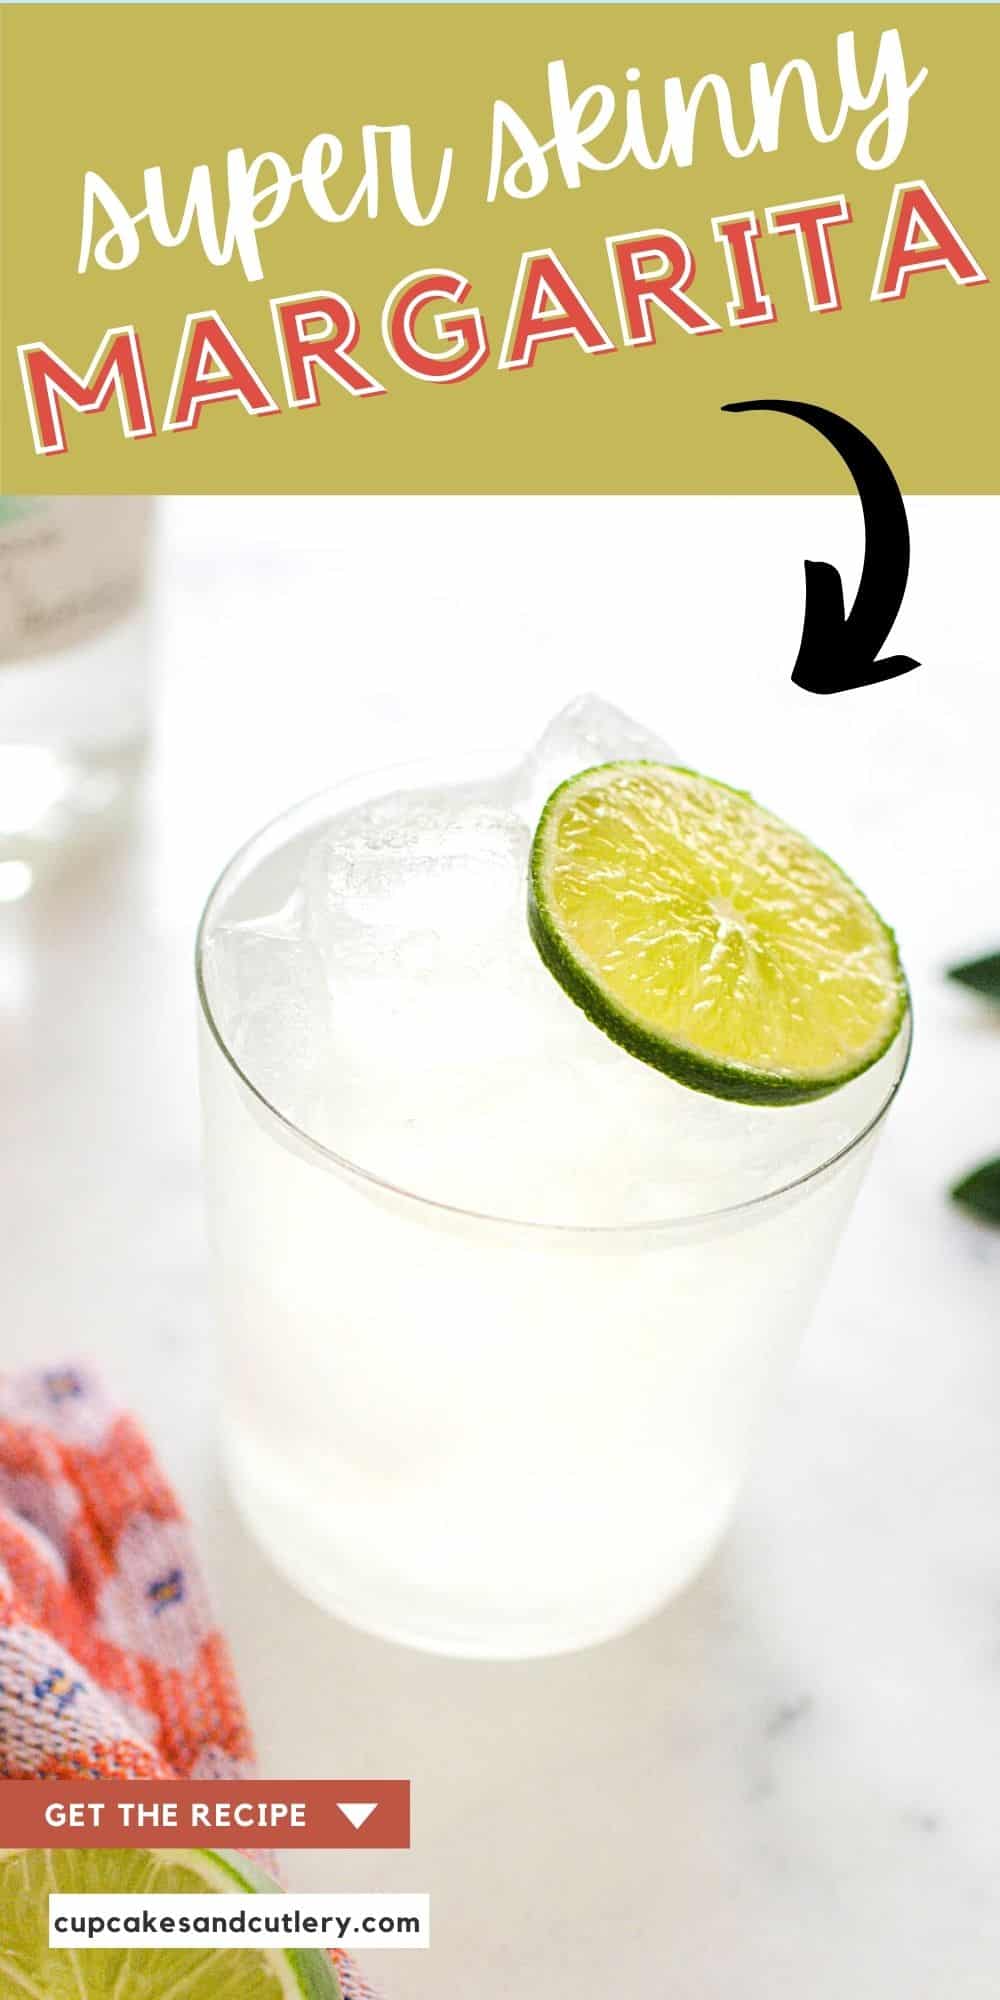 Easy House Skinny Margarita Recipe | 3 Clean Ingredients and 5 Minutes!